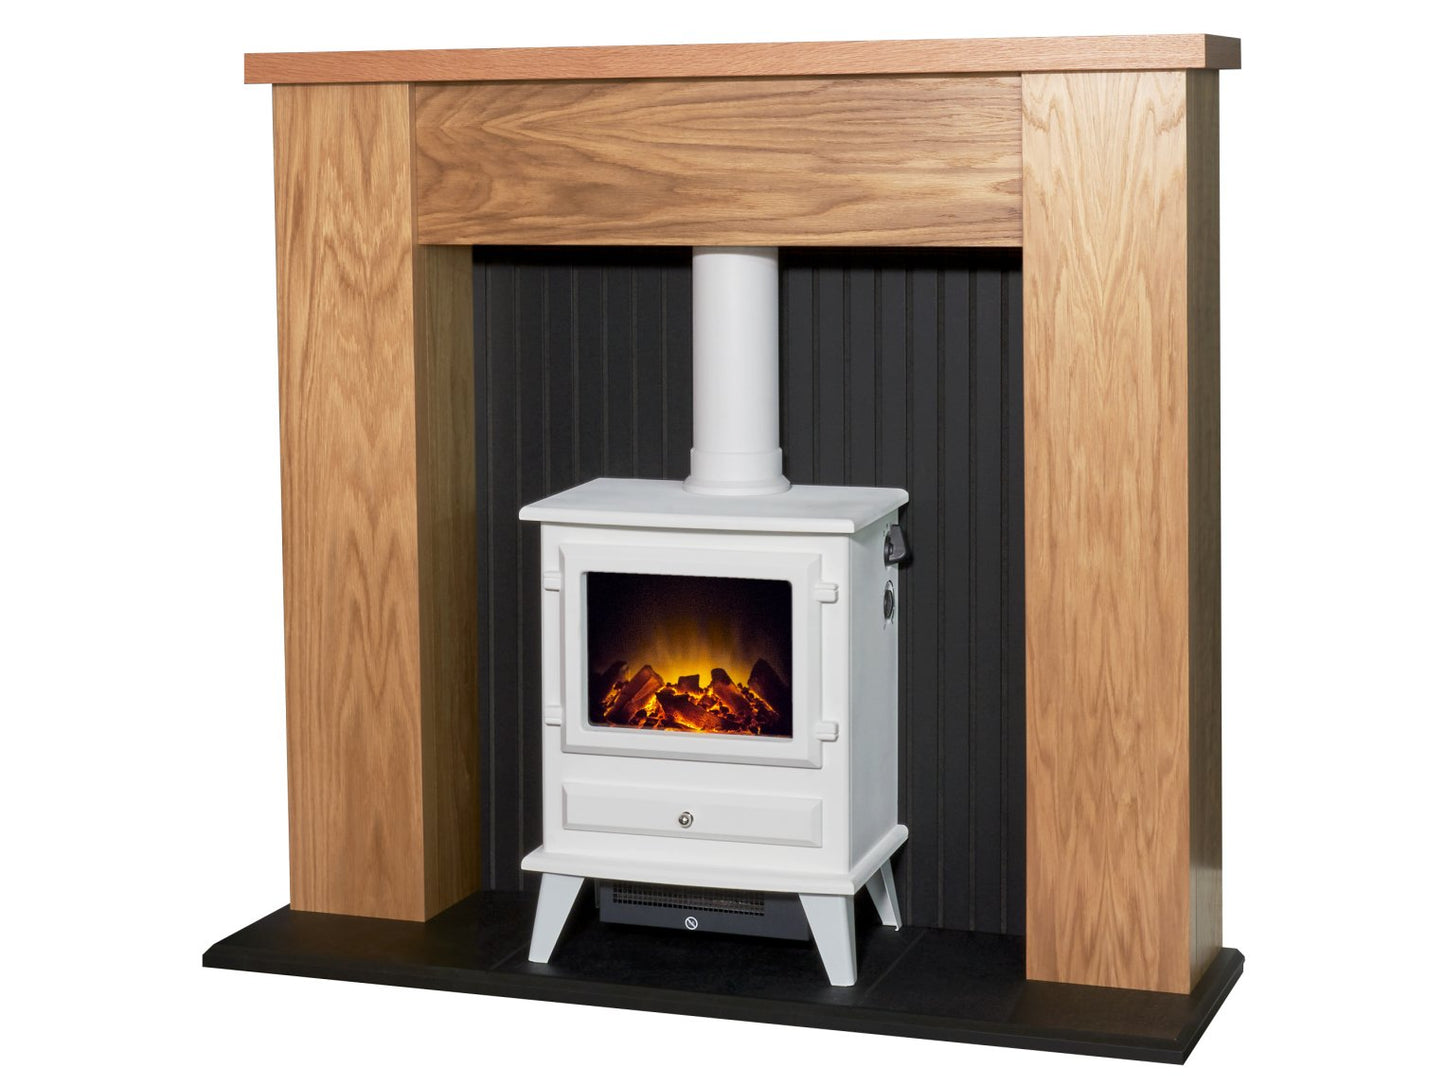 Adam New England Stove Fireplace Oak & Black + Hudson Electric Stove Textured White, 48"